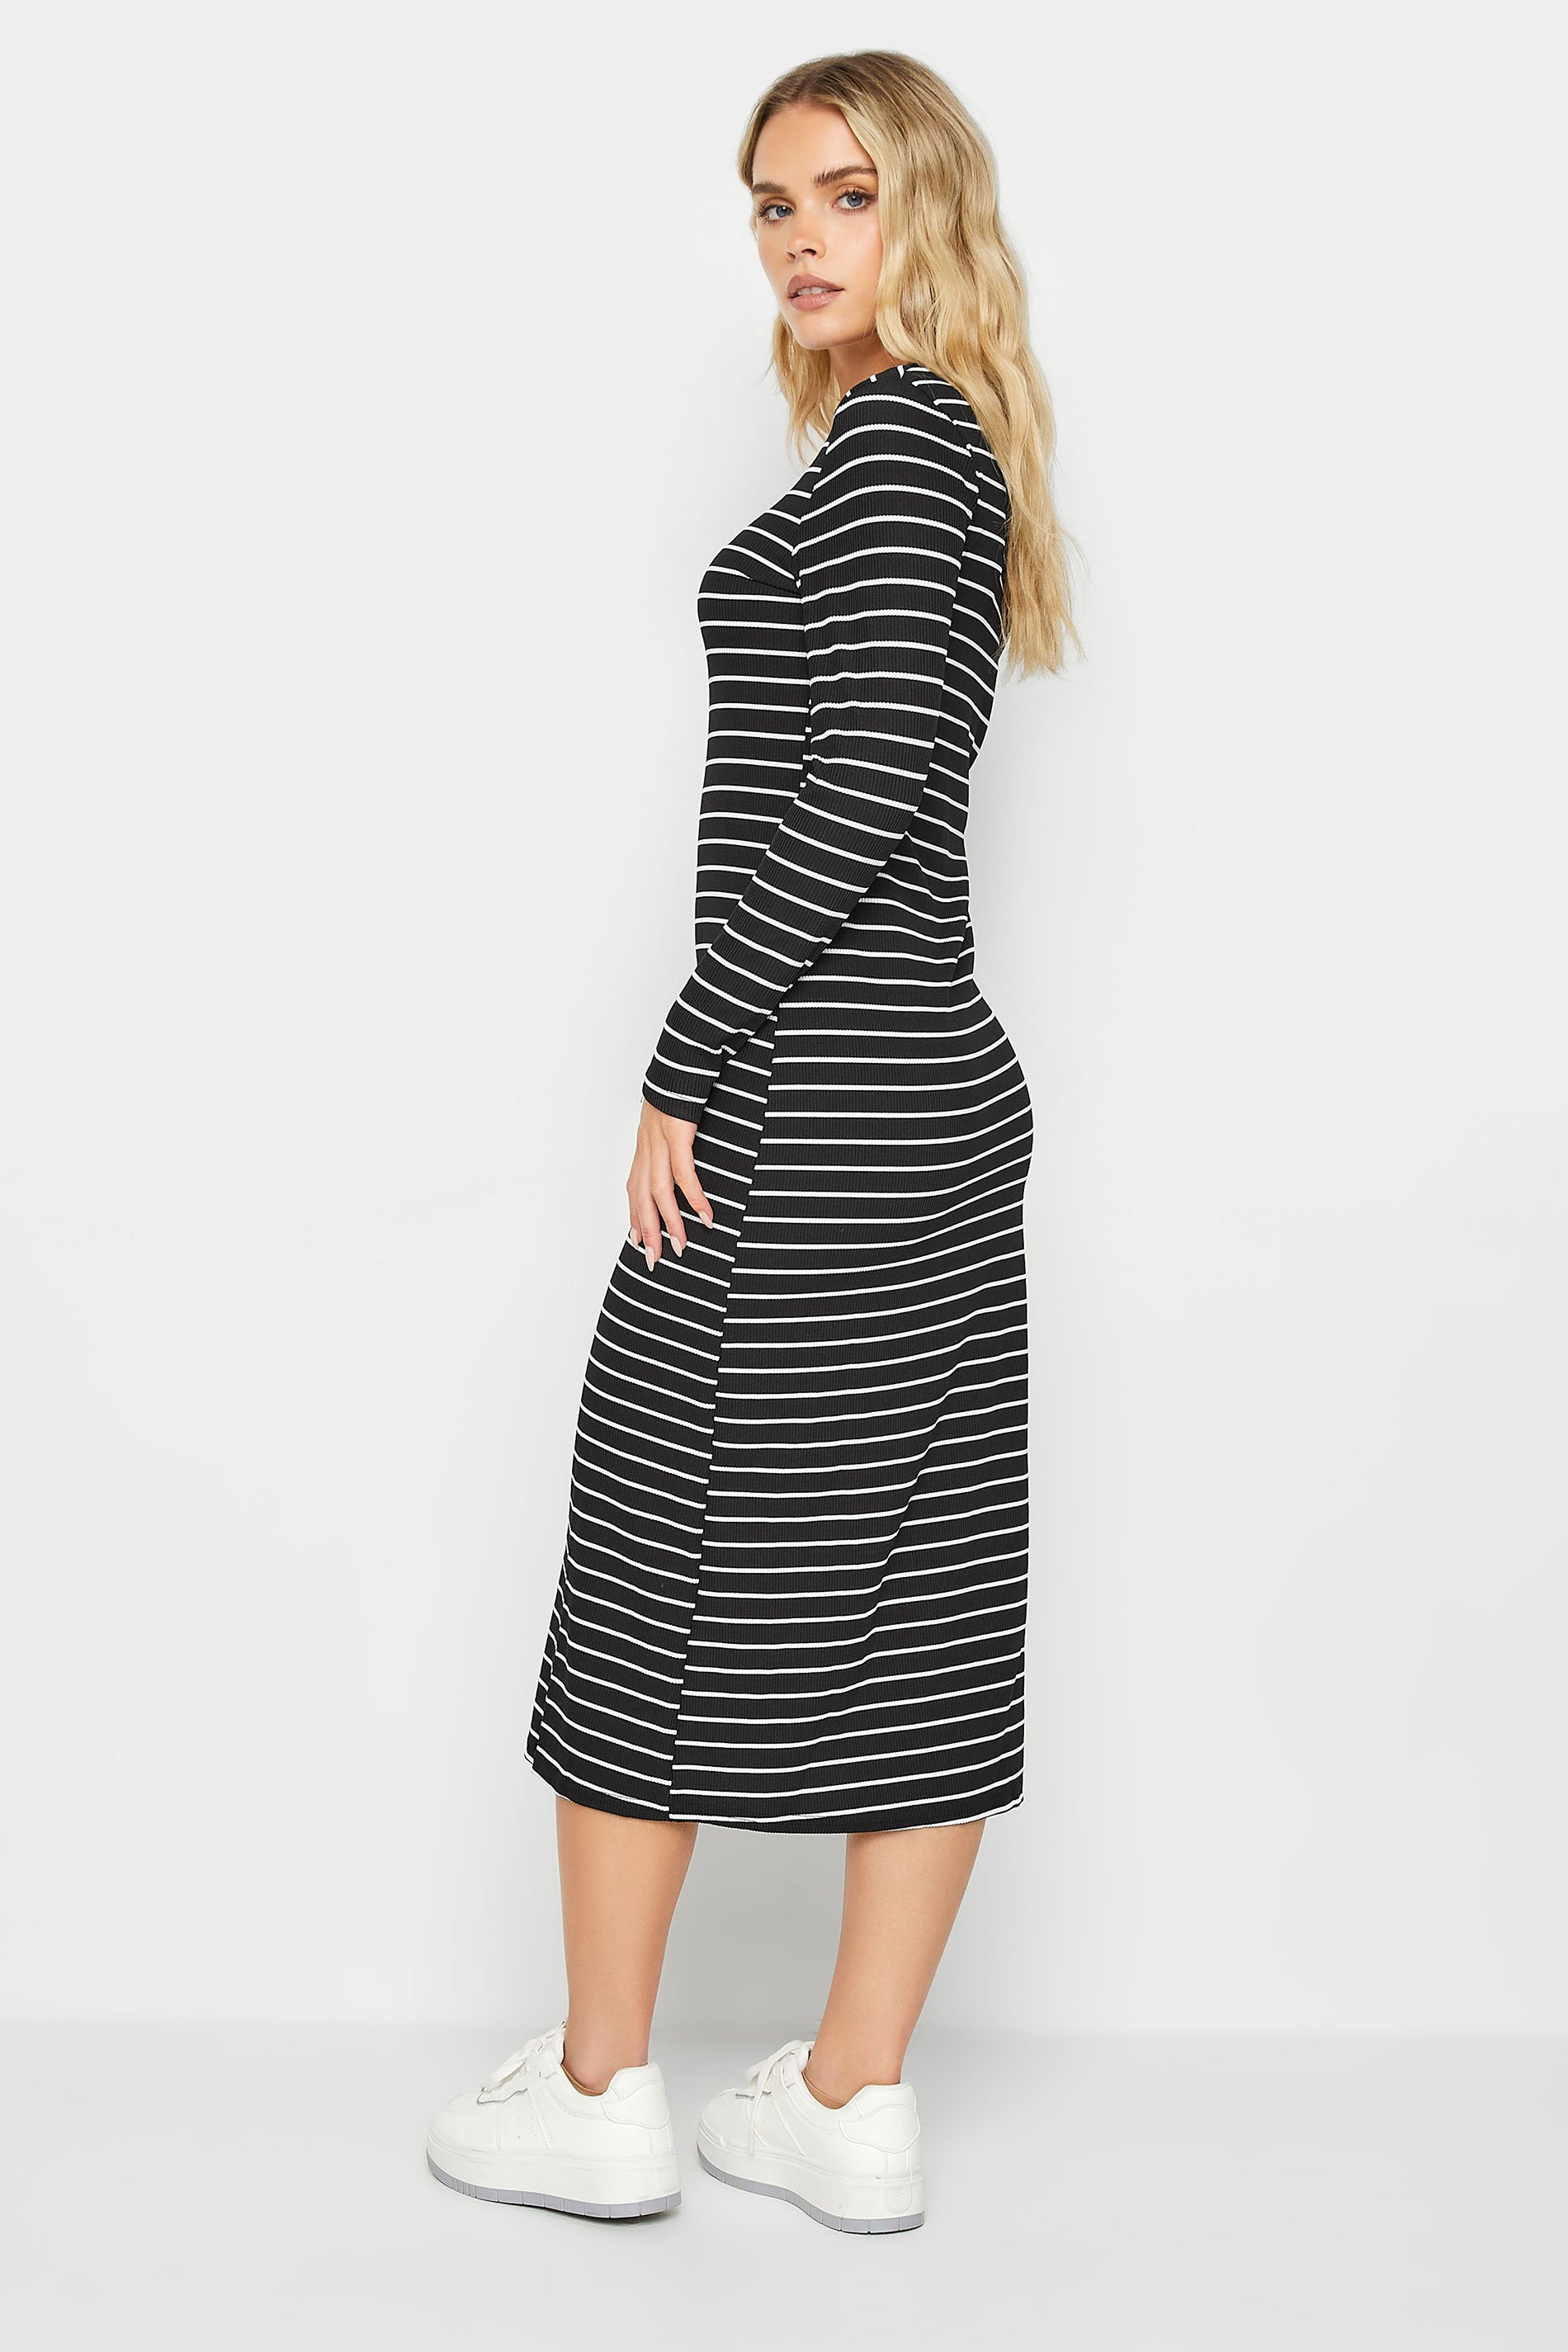 PixieGirl Petite Black & White Stripe Midaxi Dress | PixieGirl  3